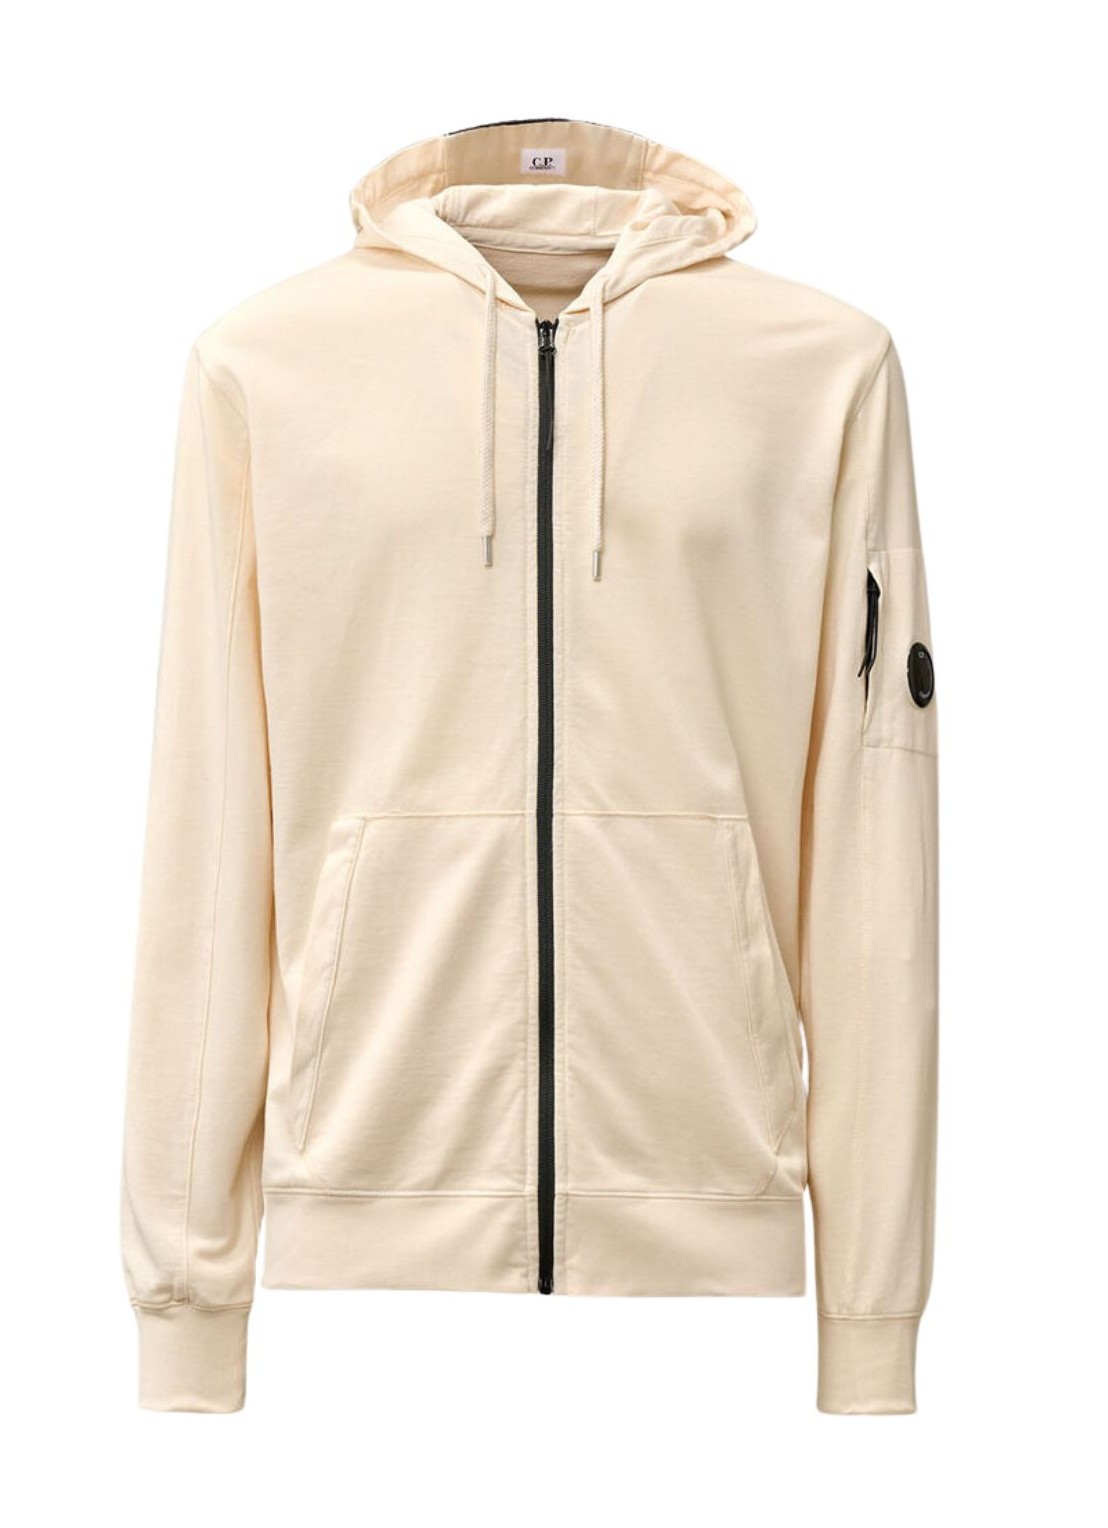 Sudadera c.p.company sweater man light fleece zipped hoodie 16cmss034a002246g 402 talla marron
 